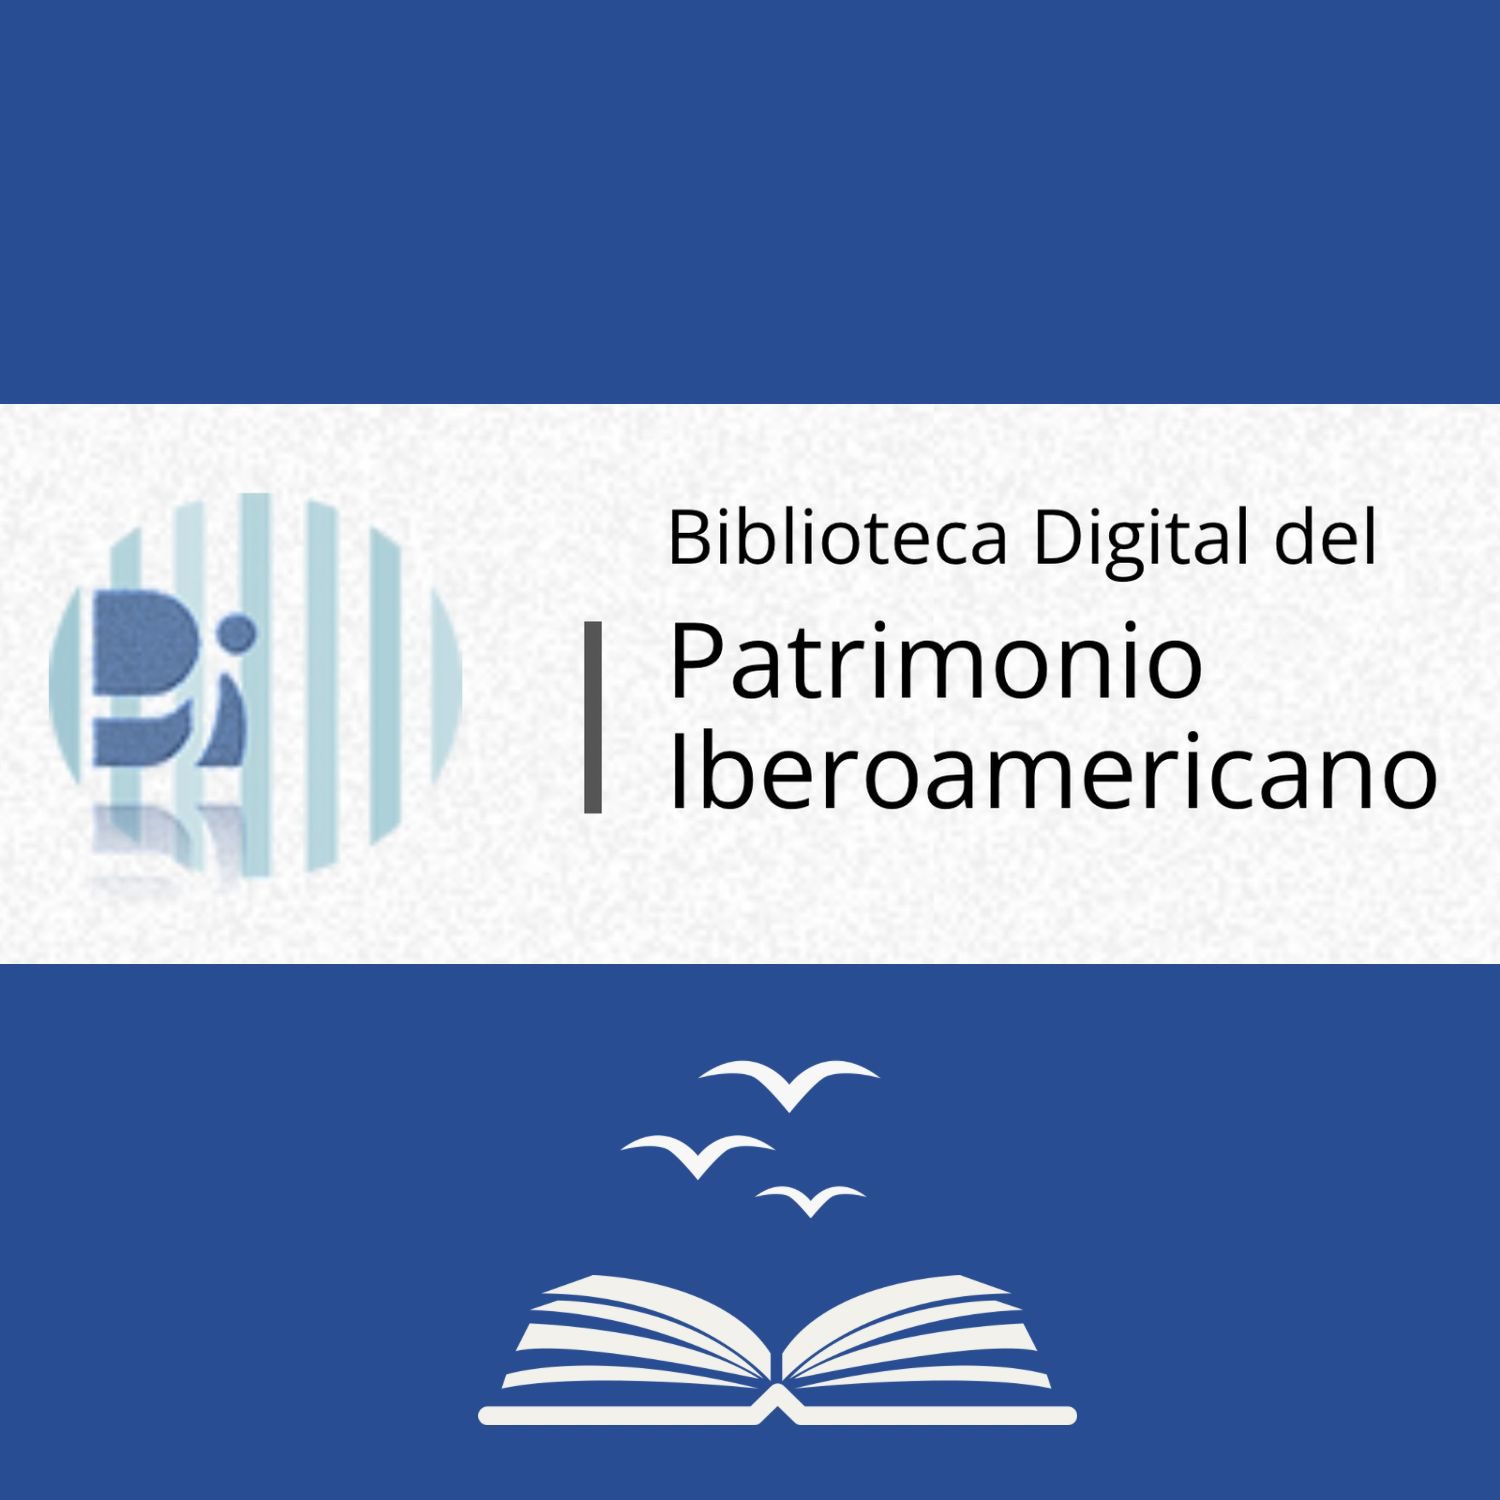 You are currently viewing Biblioteca Digital del Patrimonio Iberoamericano